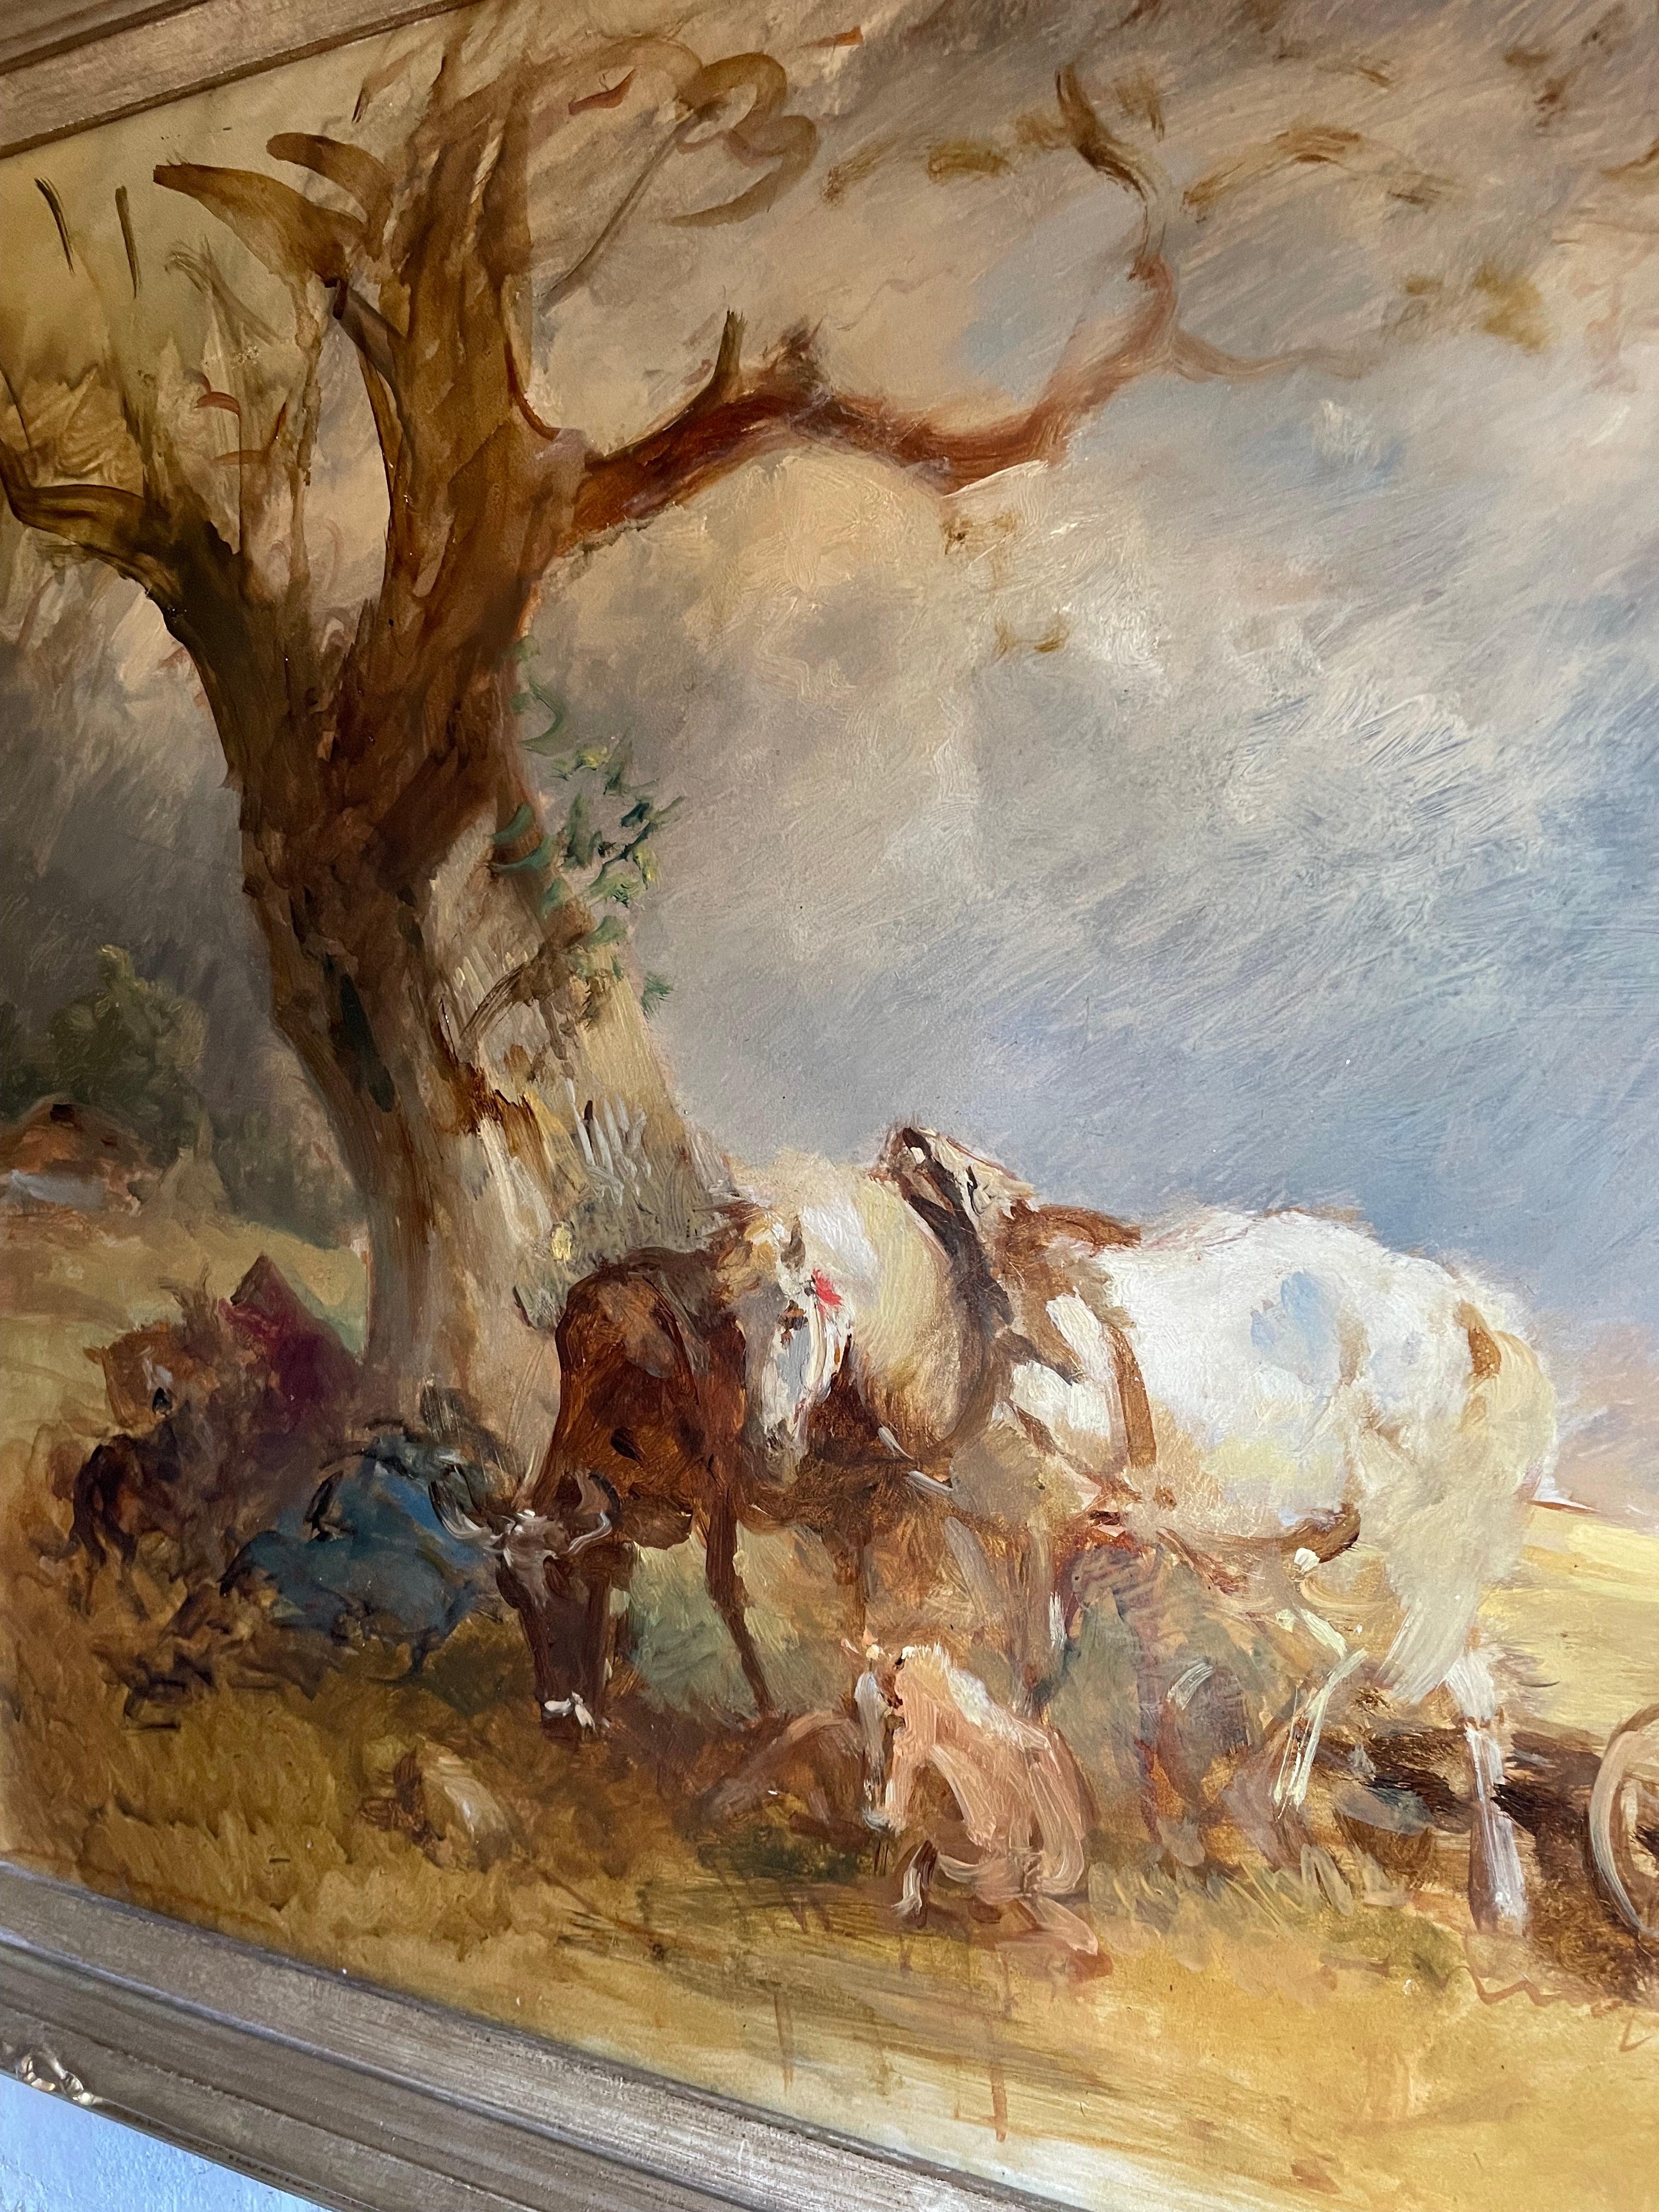 Horses Grazing: Antique Oil on Wood Panel